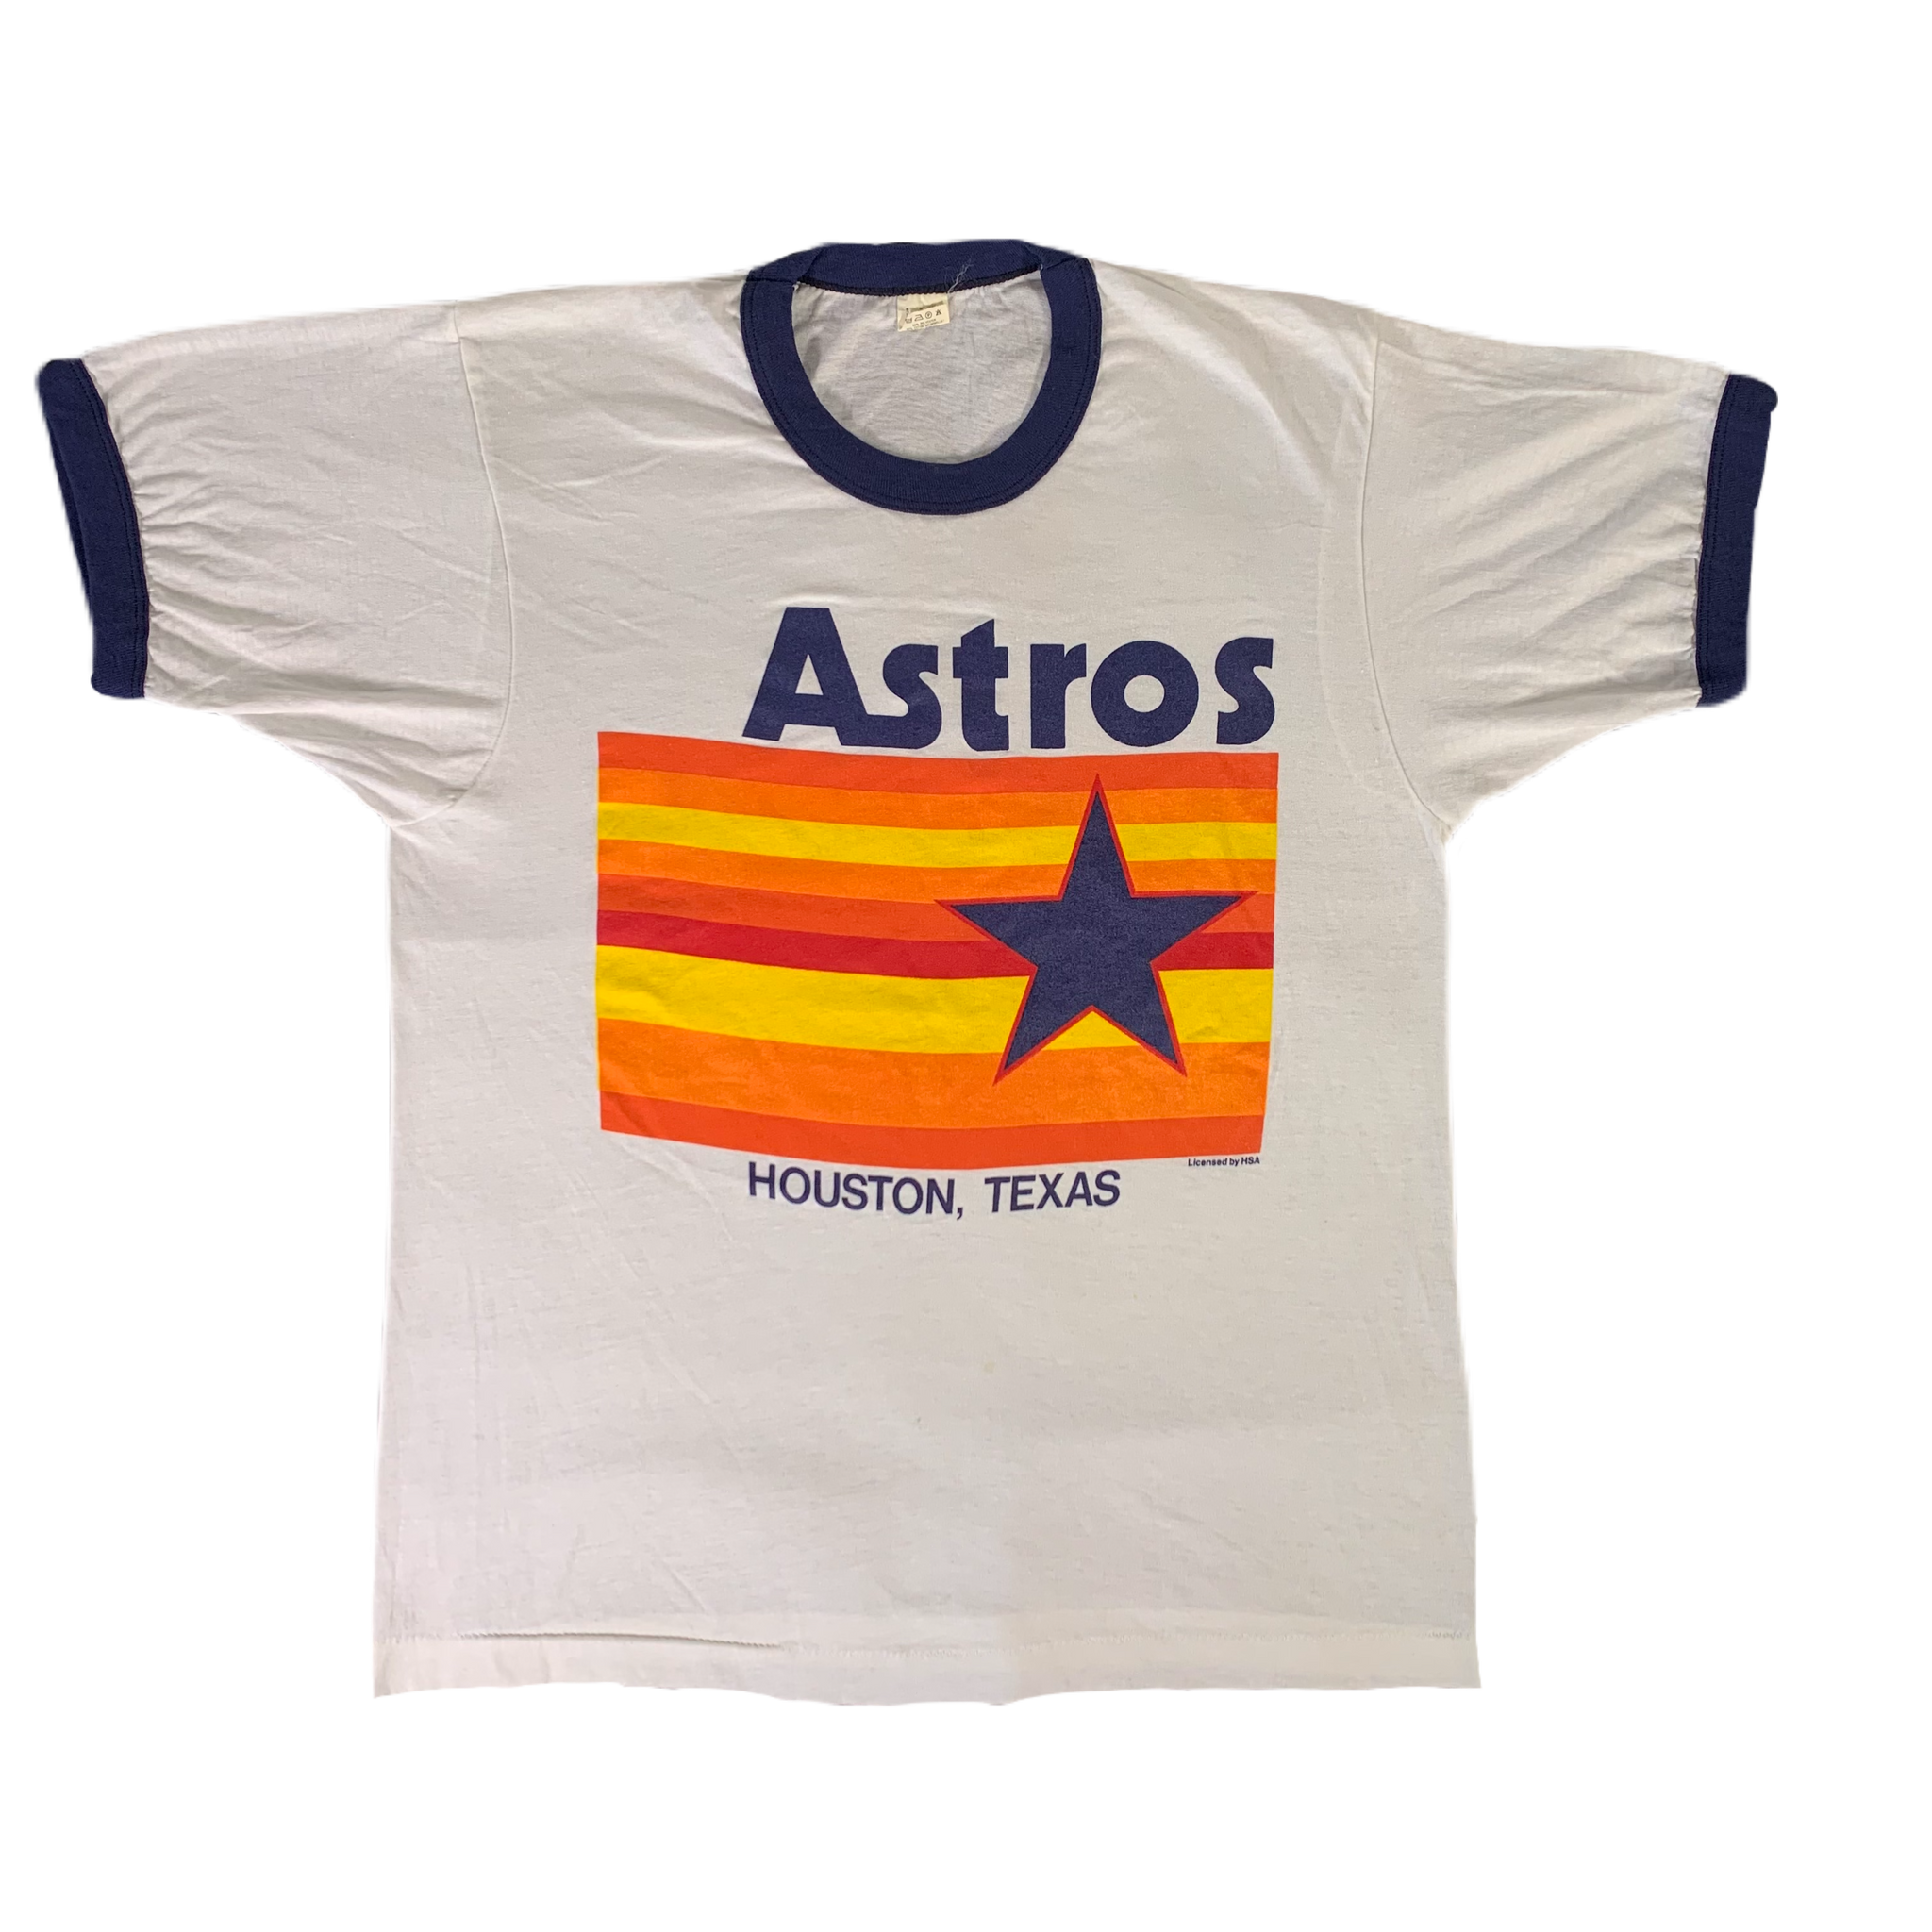 Houston Astros World Series Sweatshirt 1962 Astros Sweater 